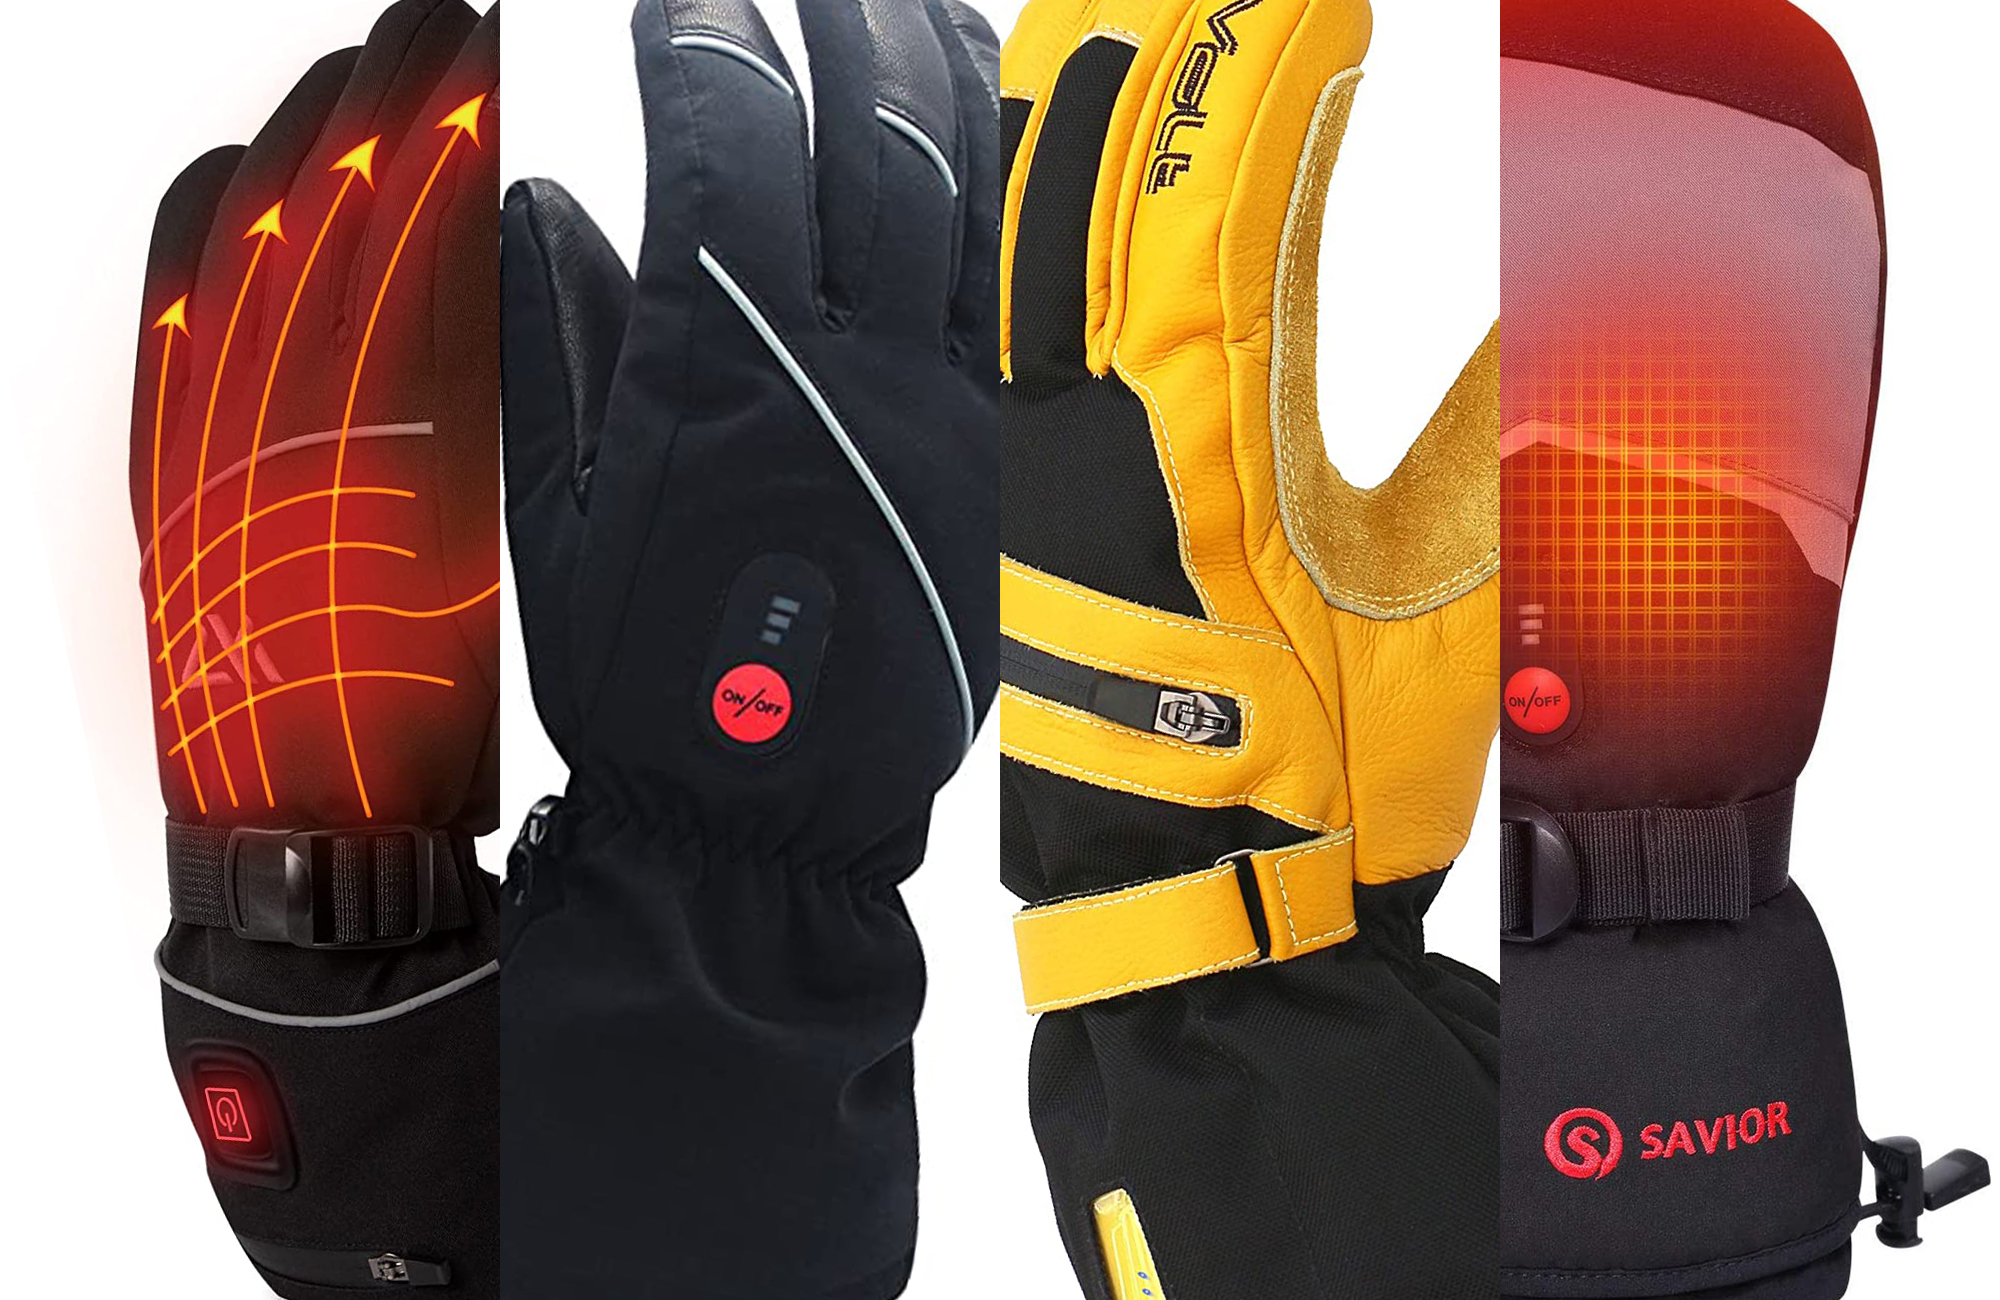 https://www.popsci.com/uploads/2022/08/10/best-heated-gloves-header.jpg?auto=webp&width=1440&height=936